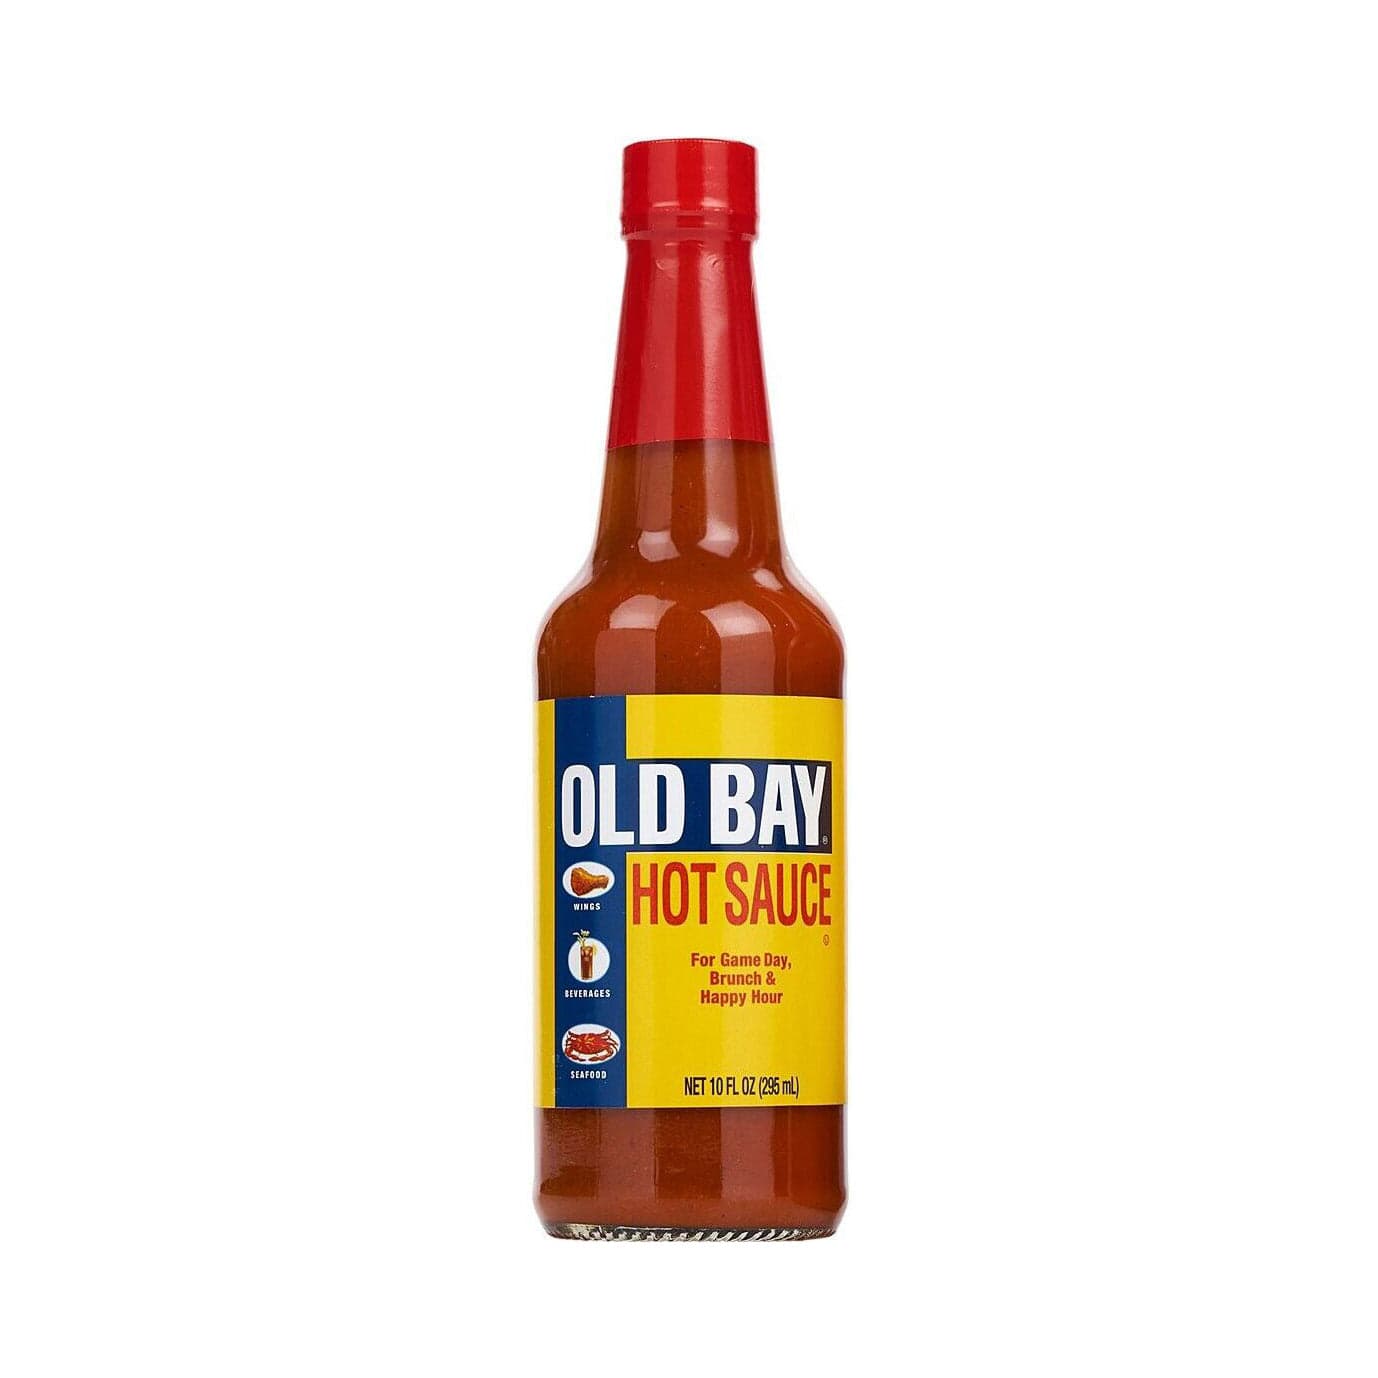 Old Bay Old Bay Hot Sauce 10 oz